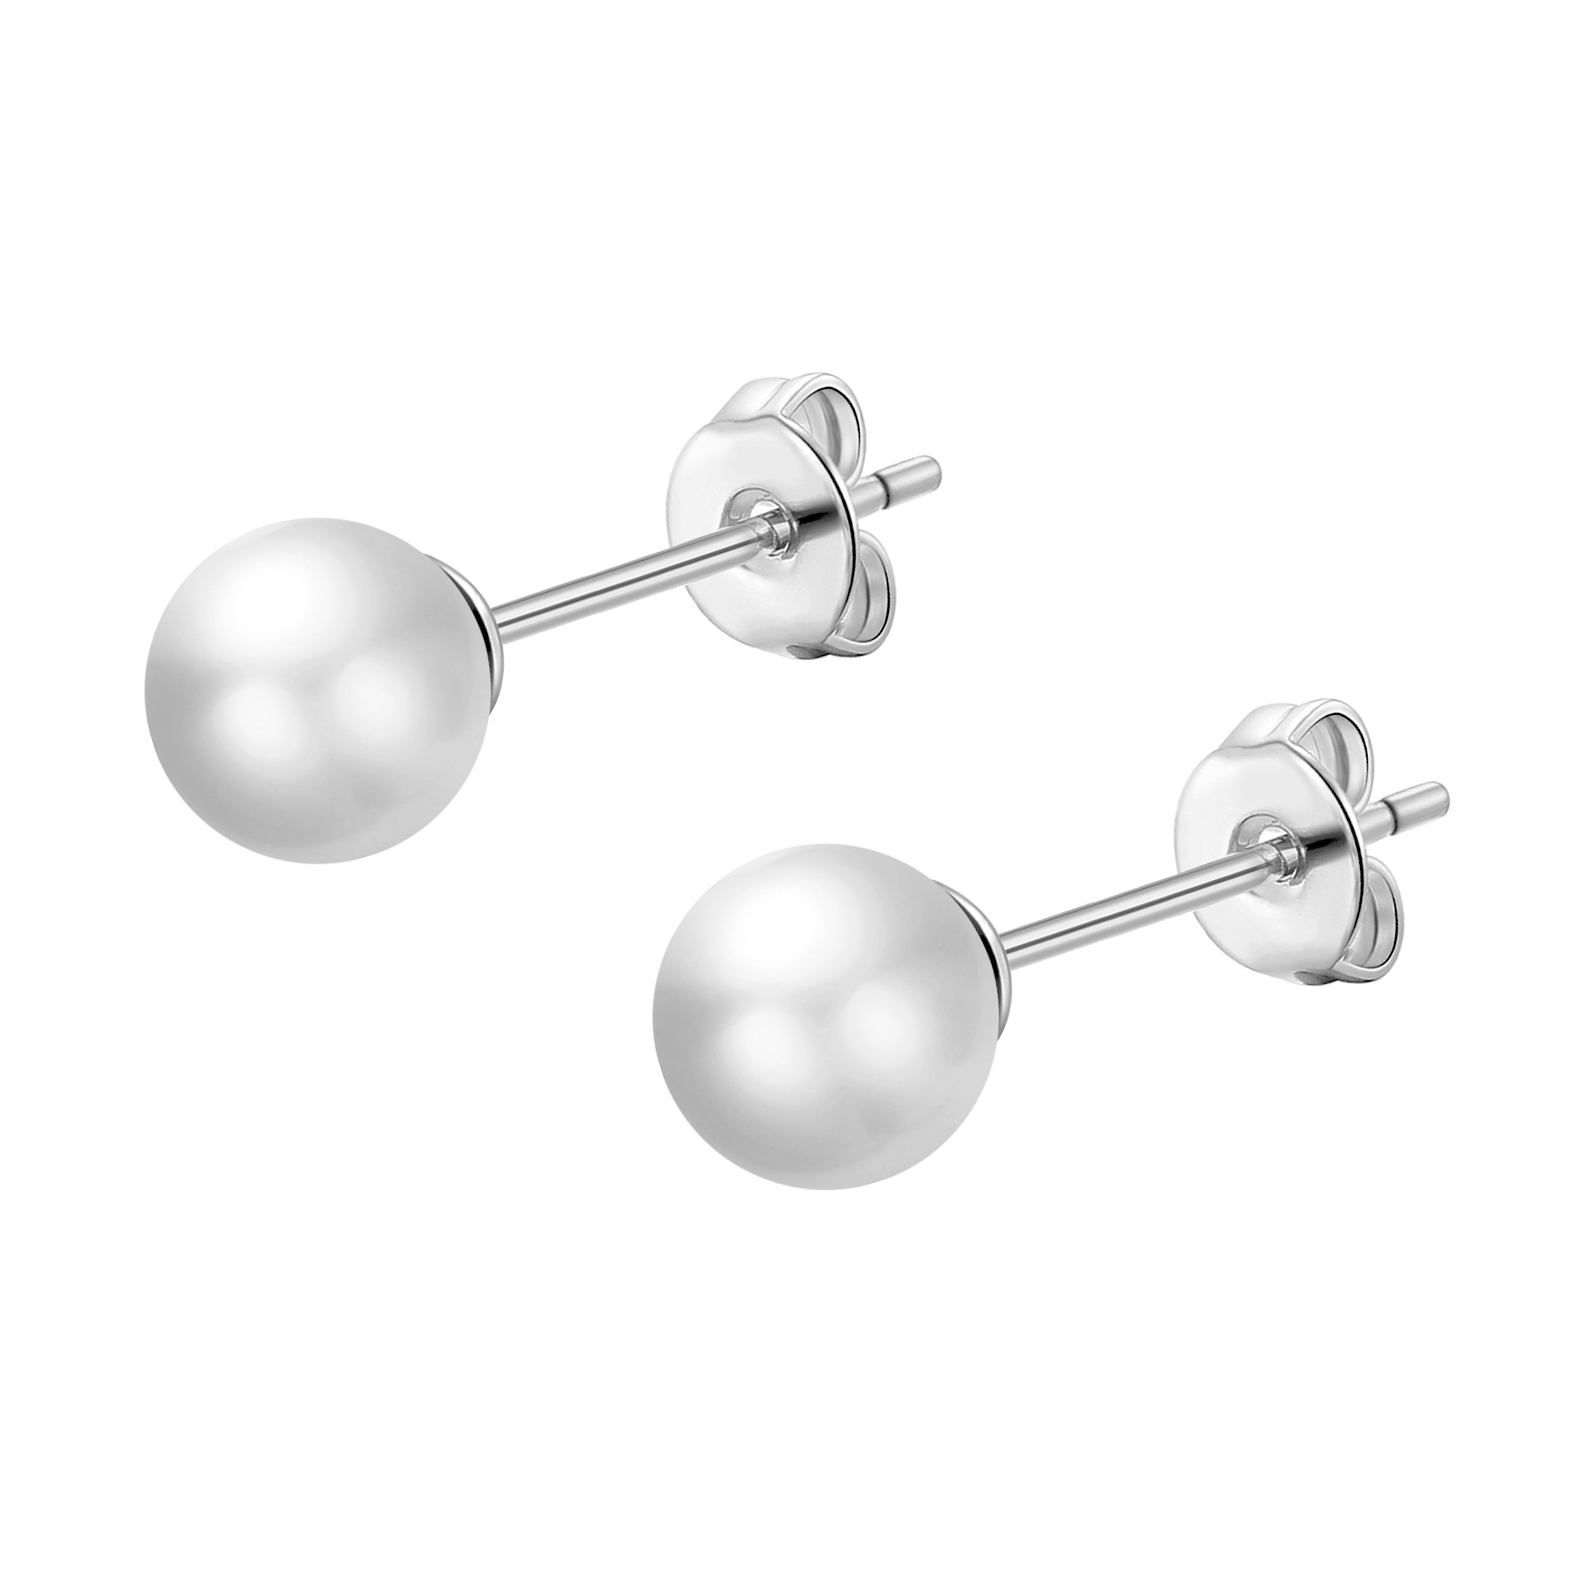 Silver Plated Shell Pearl Earrings by Philip Jones Jewellery